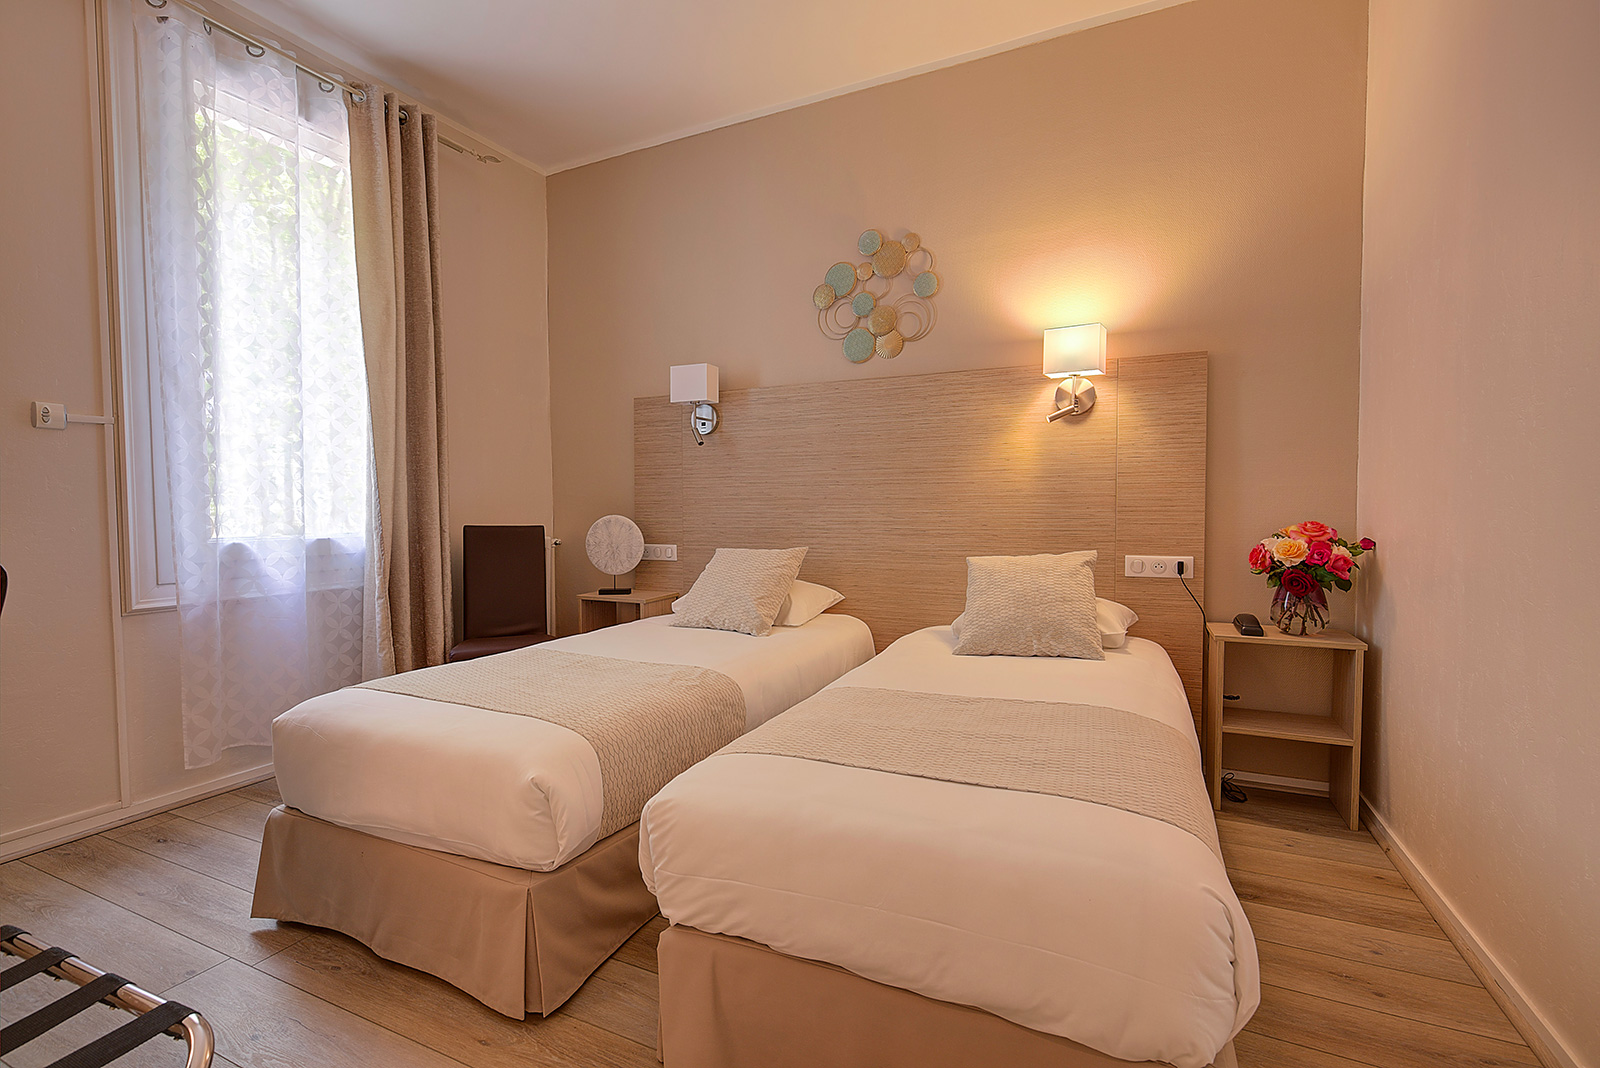 7 bed villa SW France, heated secure pool, Bordeaux / Bergerac